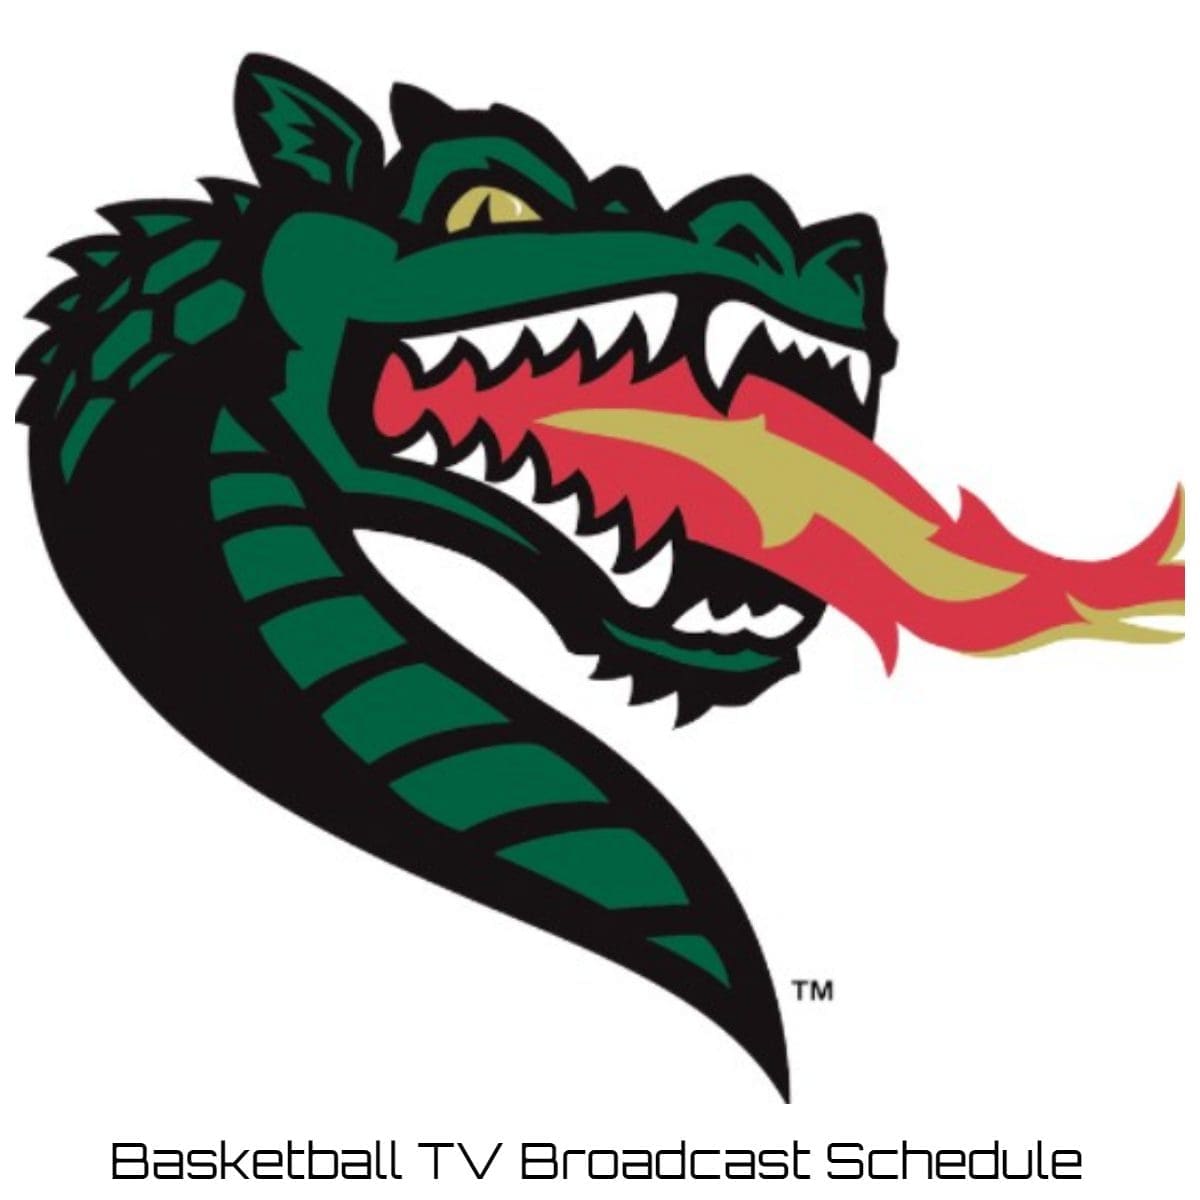 UAB Blazers Basketball TV Broadcast Schedule